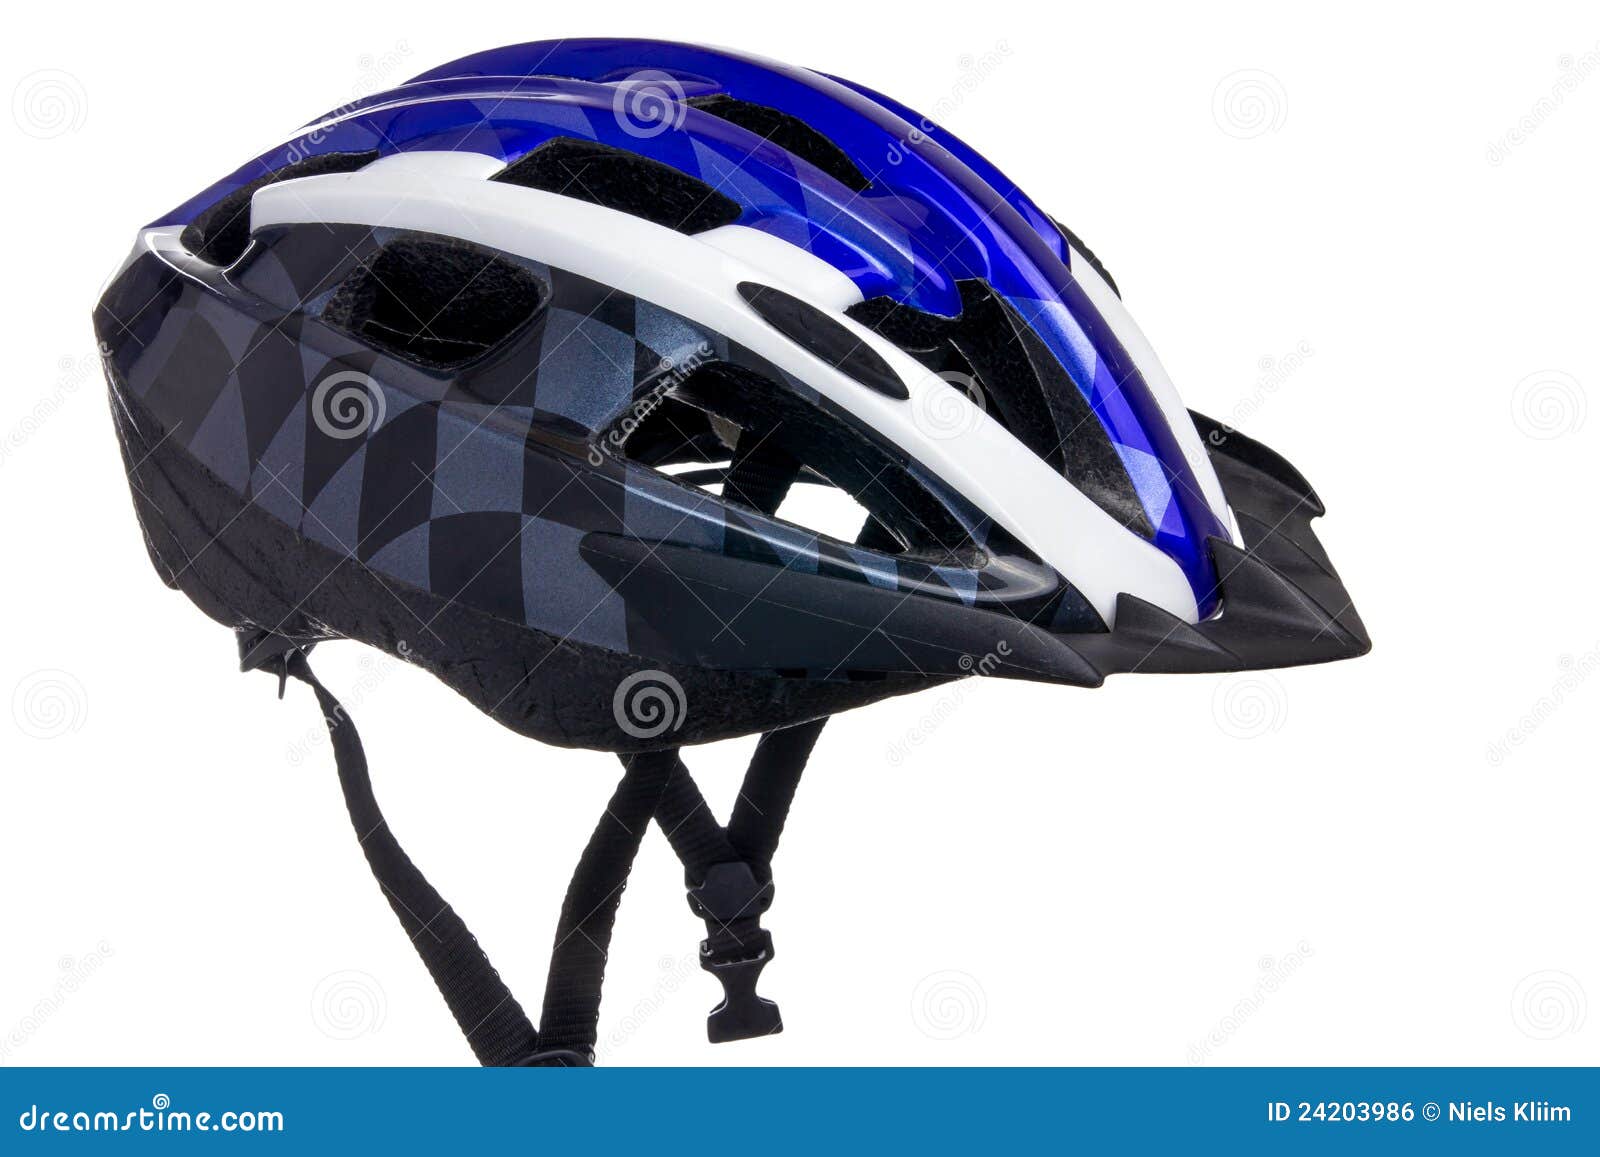 bicycle helmet clip art free - photo #37